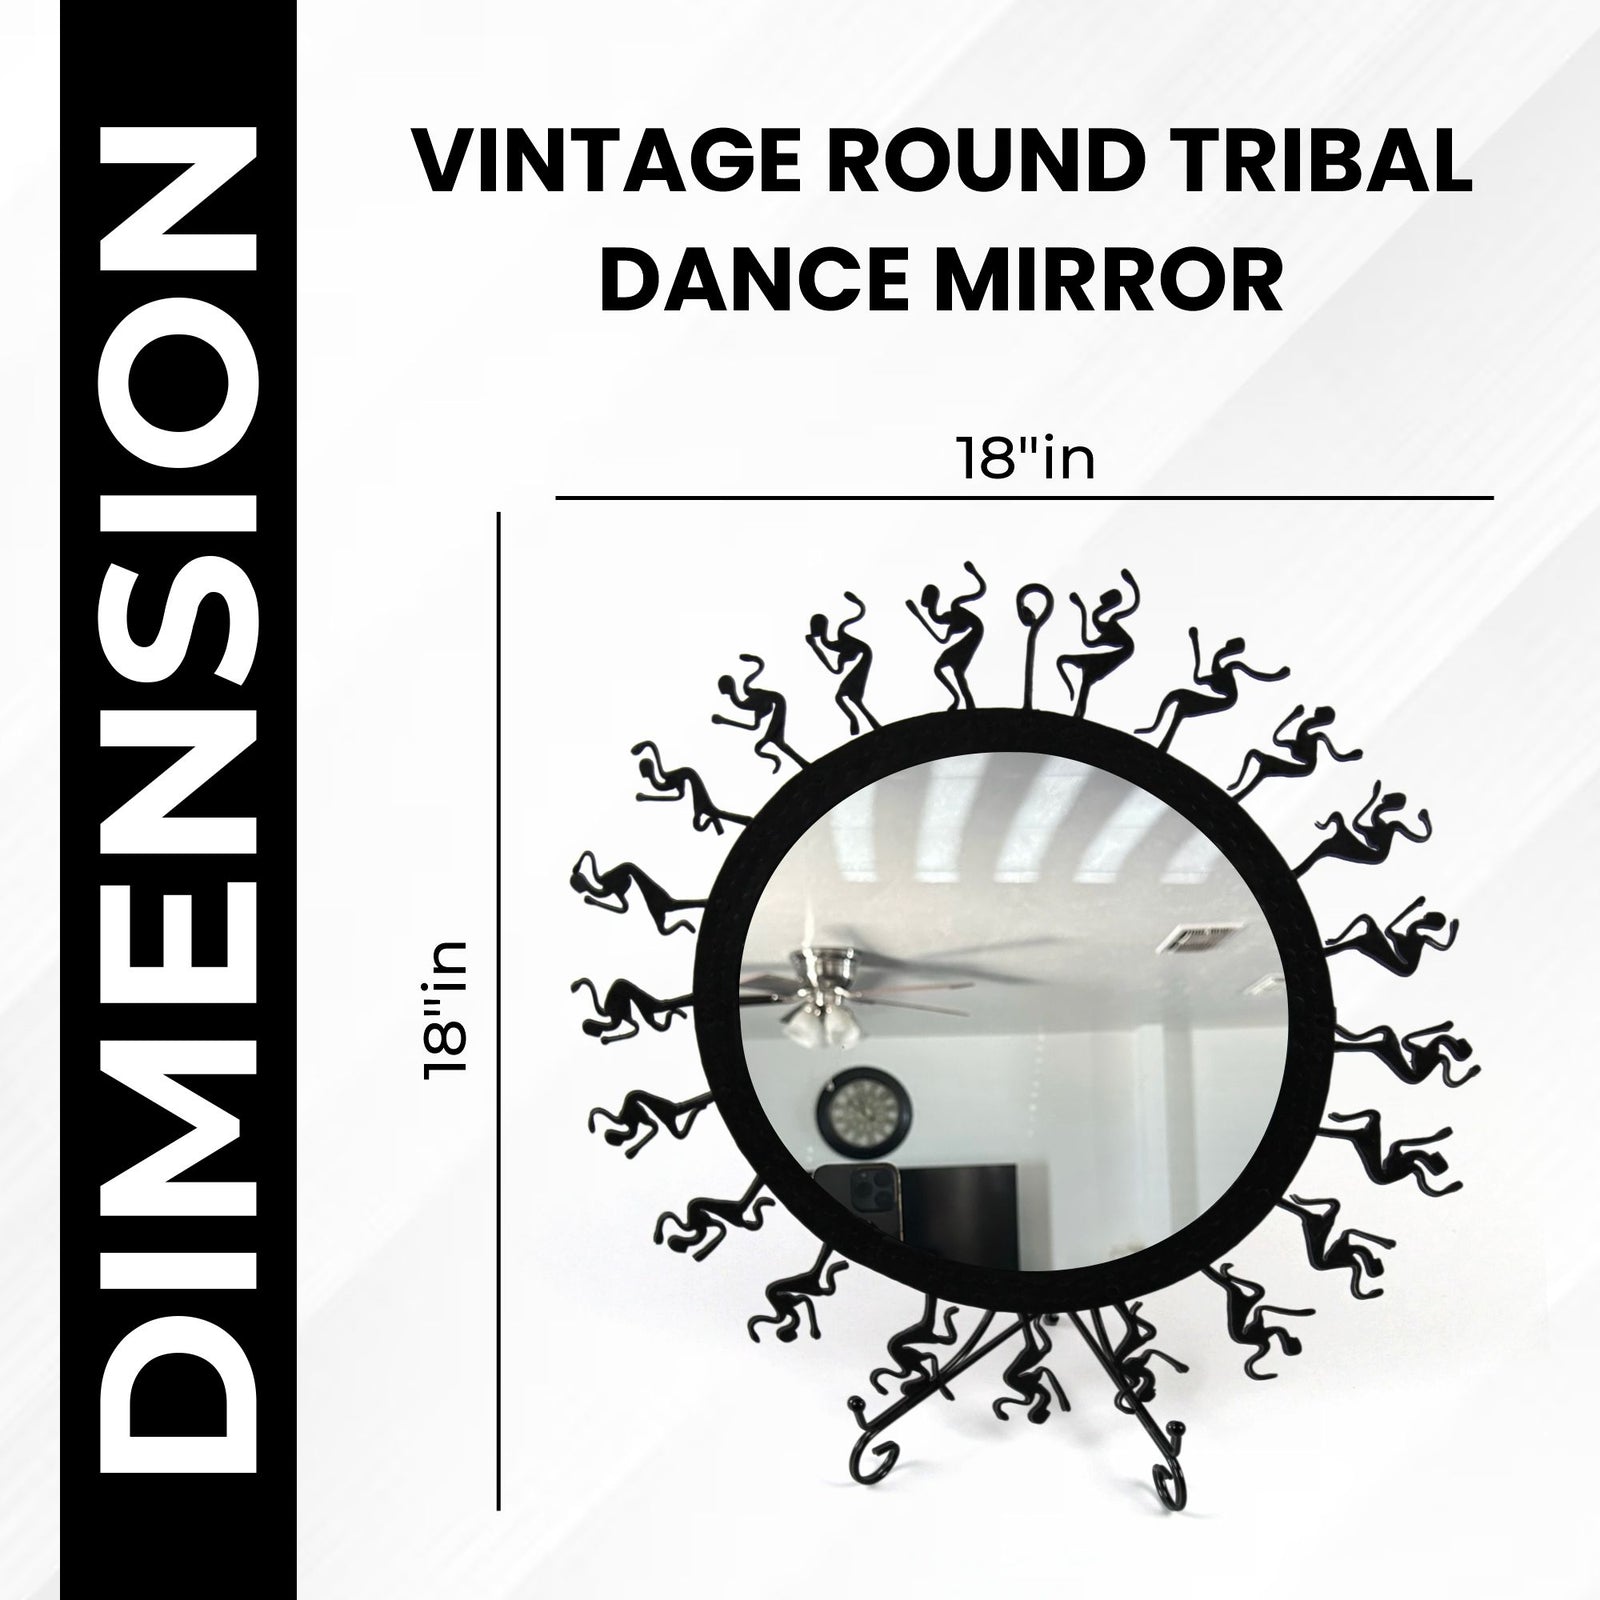 Vintage Round Tribal Art Wall Mirror